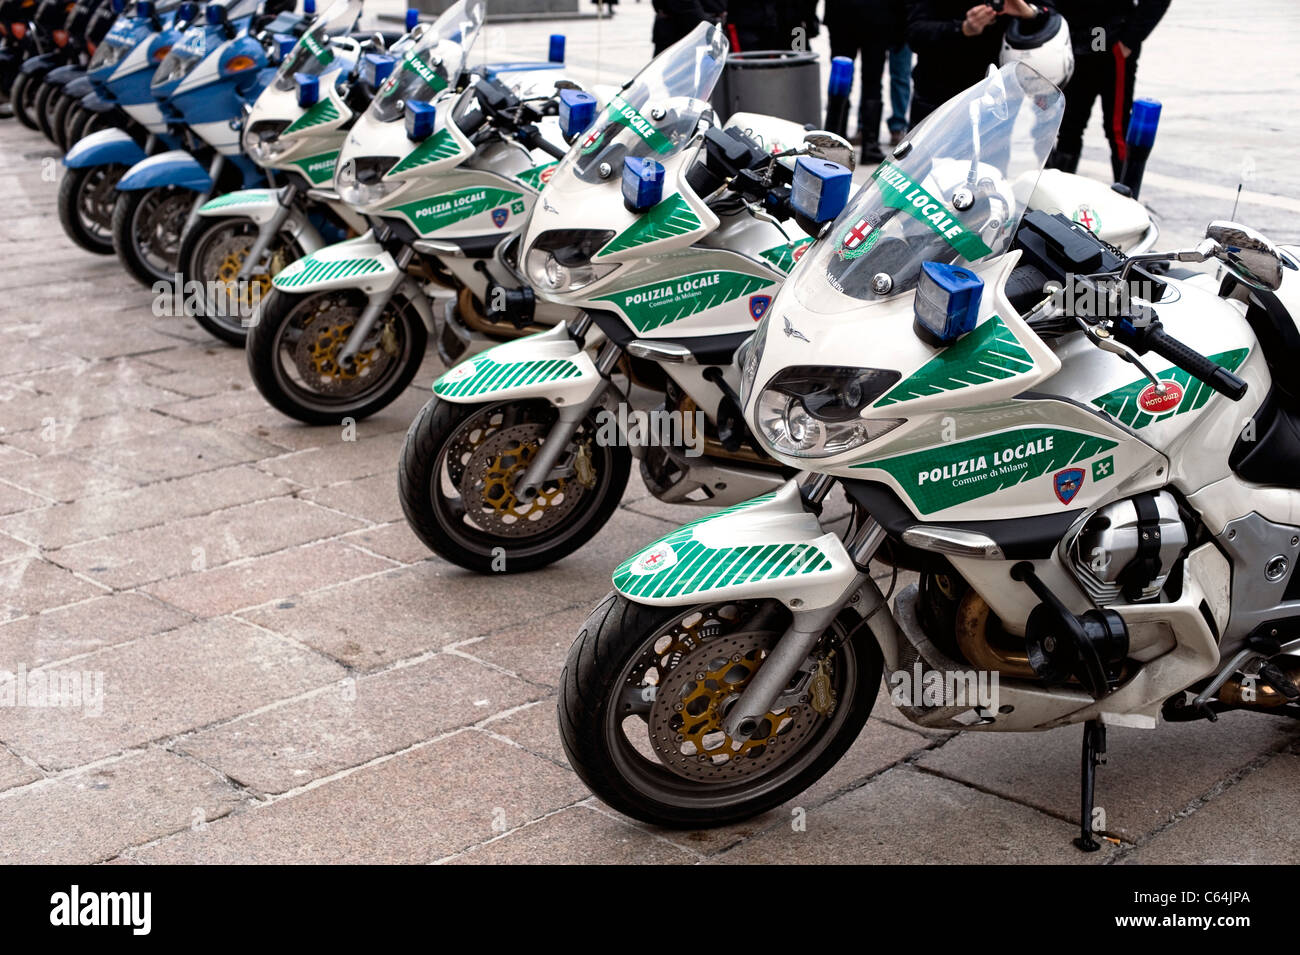 police bikes at a motorcycle gathering in Milan Stock Photo